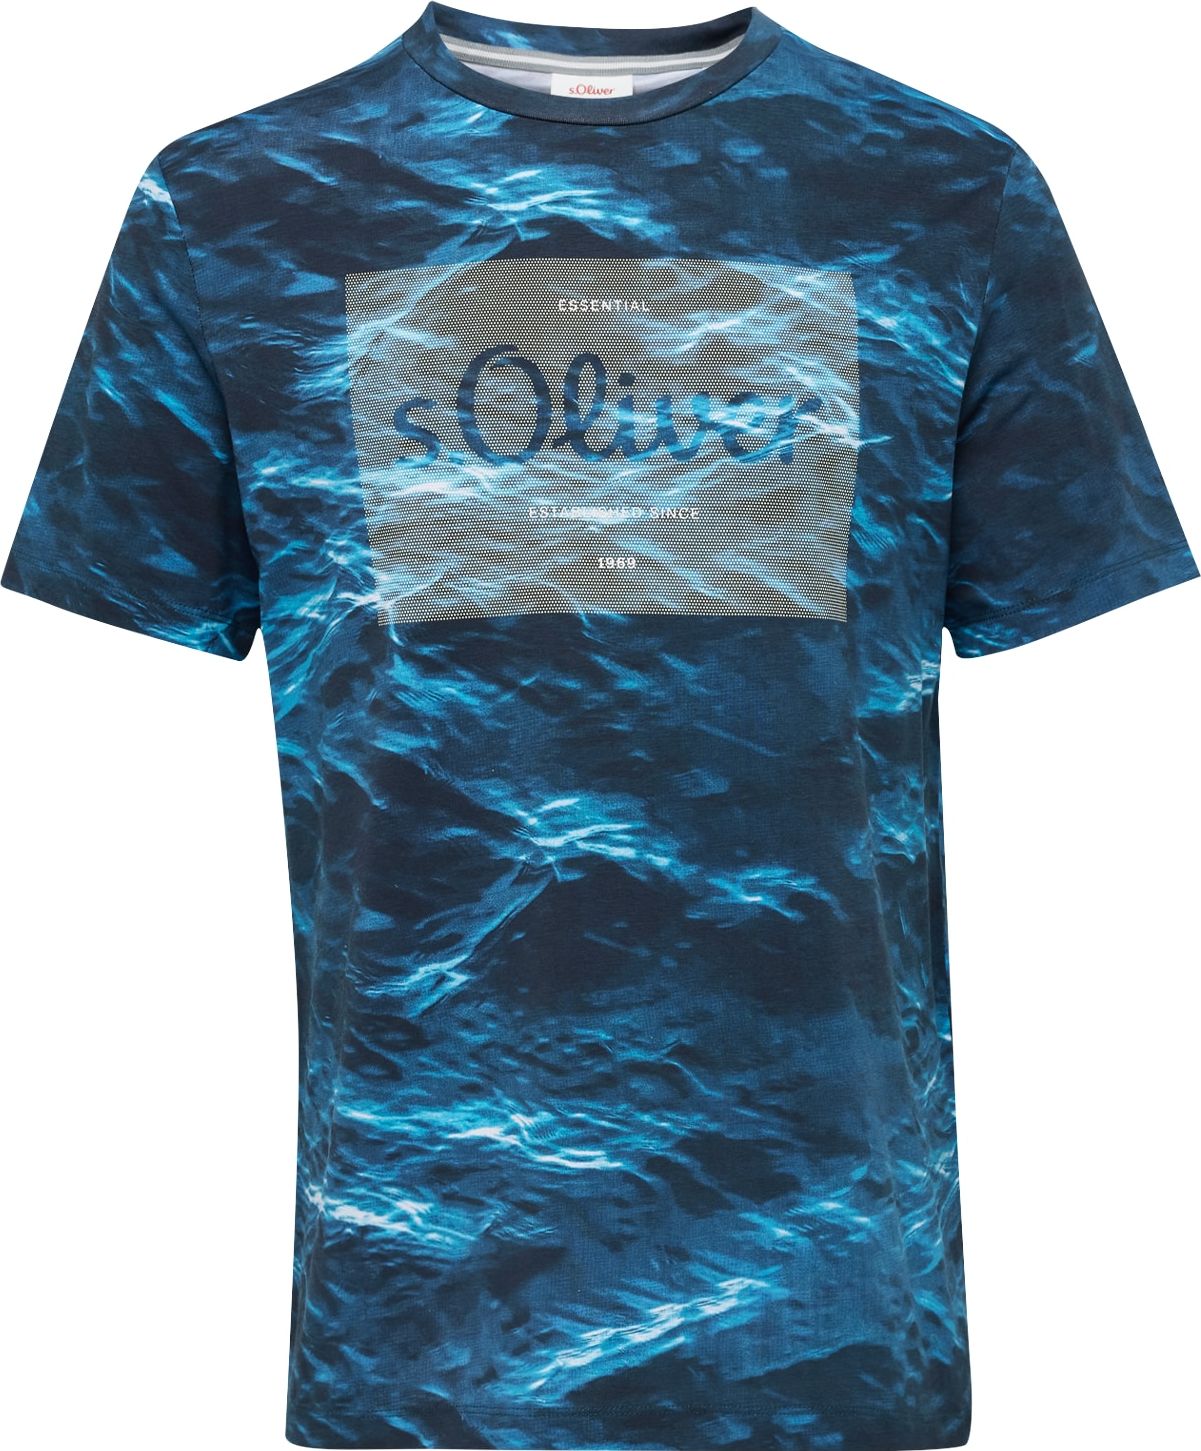 Tričko s.Oliver aqua modrá / tmavě modrá / šedá